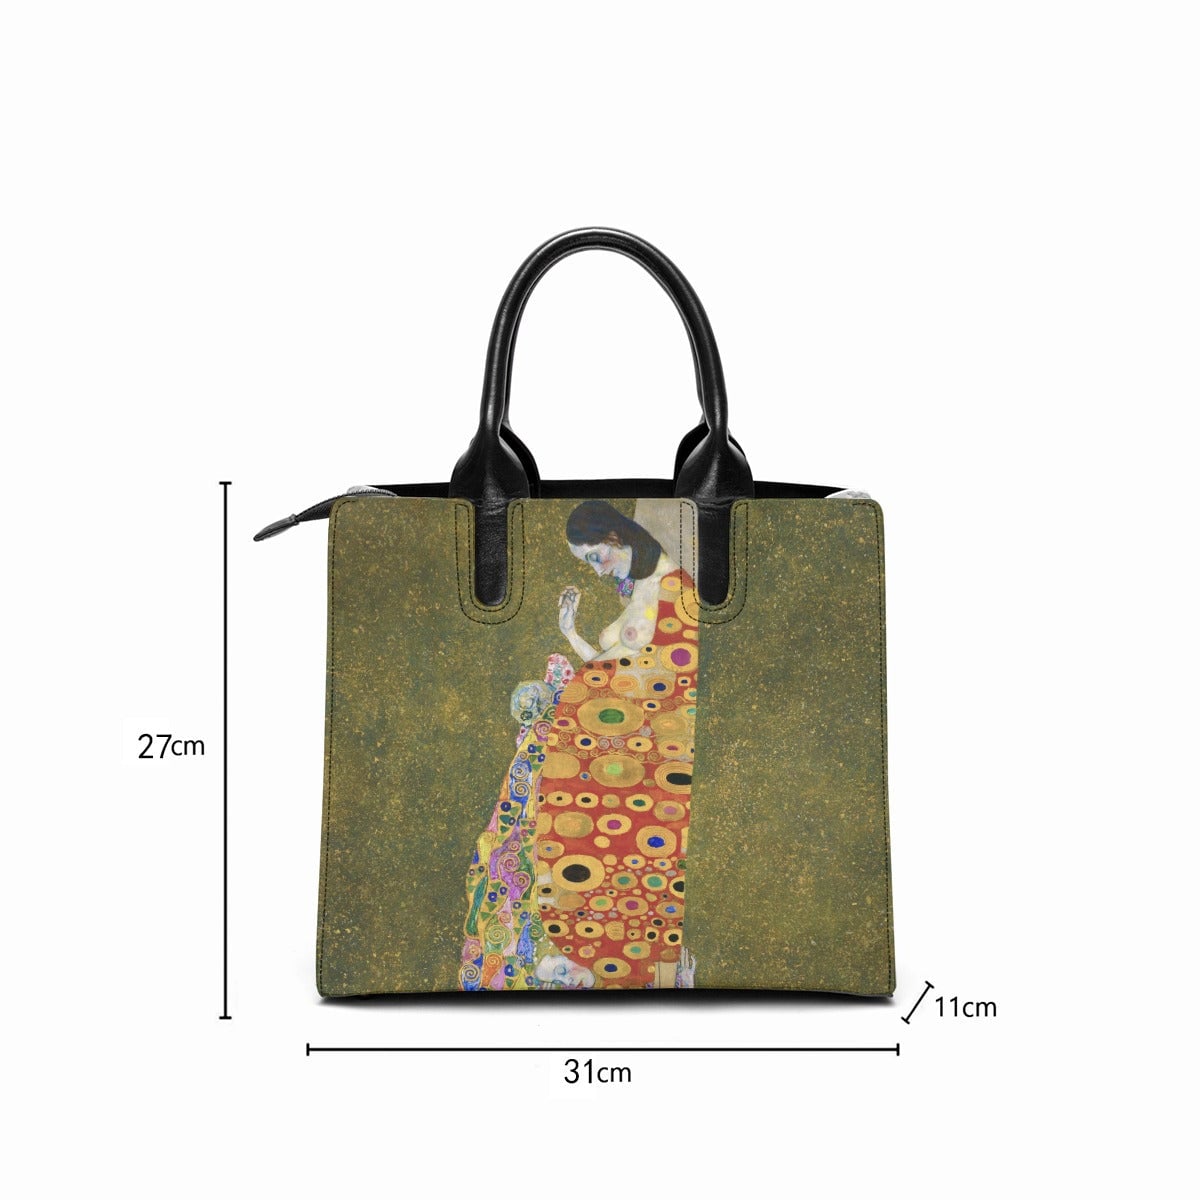 Hope II by Gustav Klimt Art Fashion Handbag